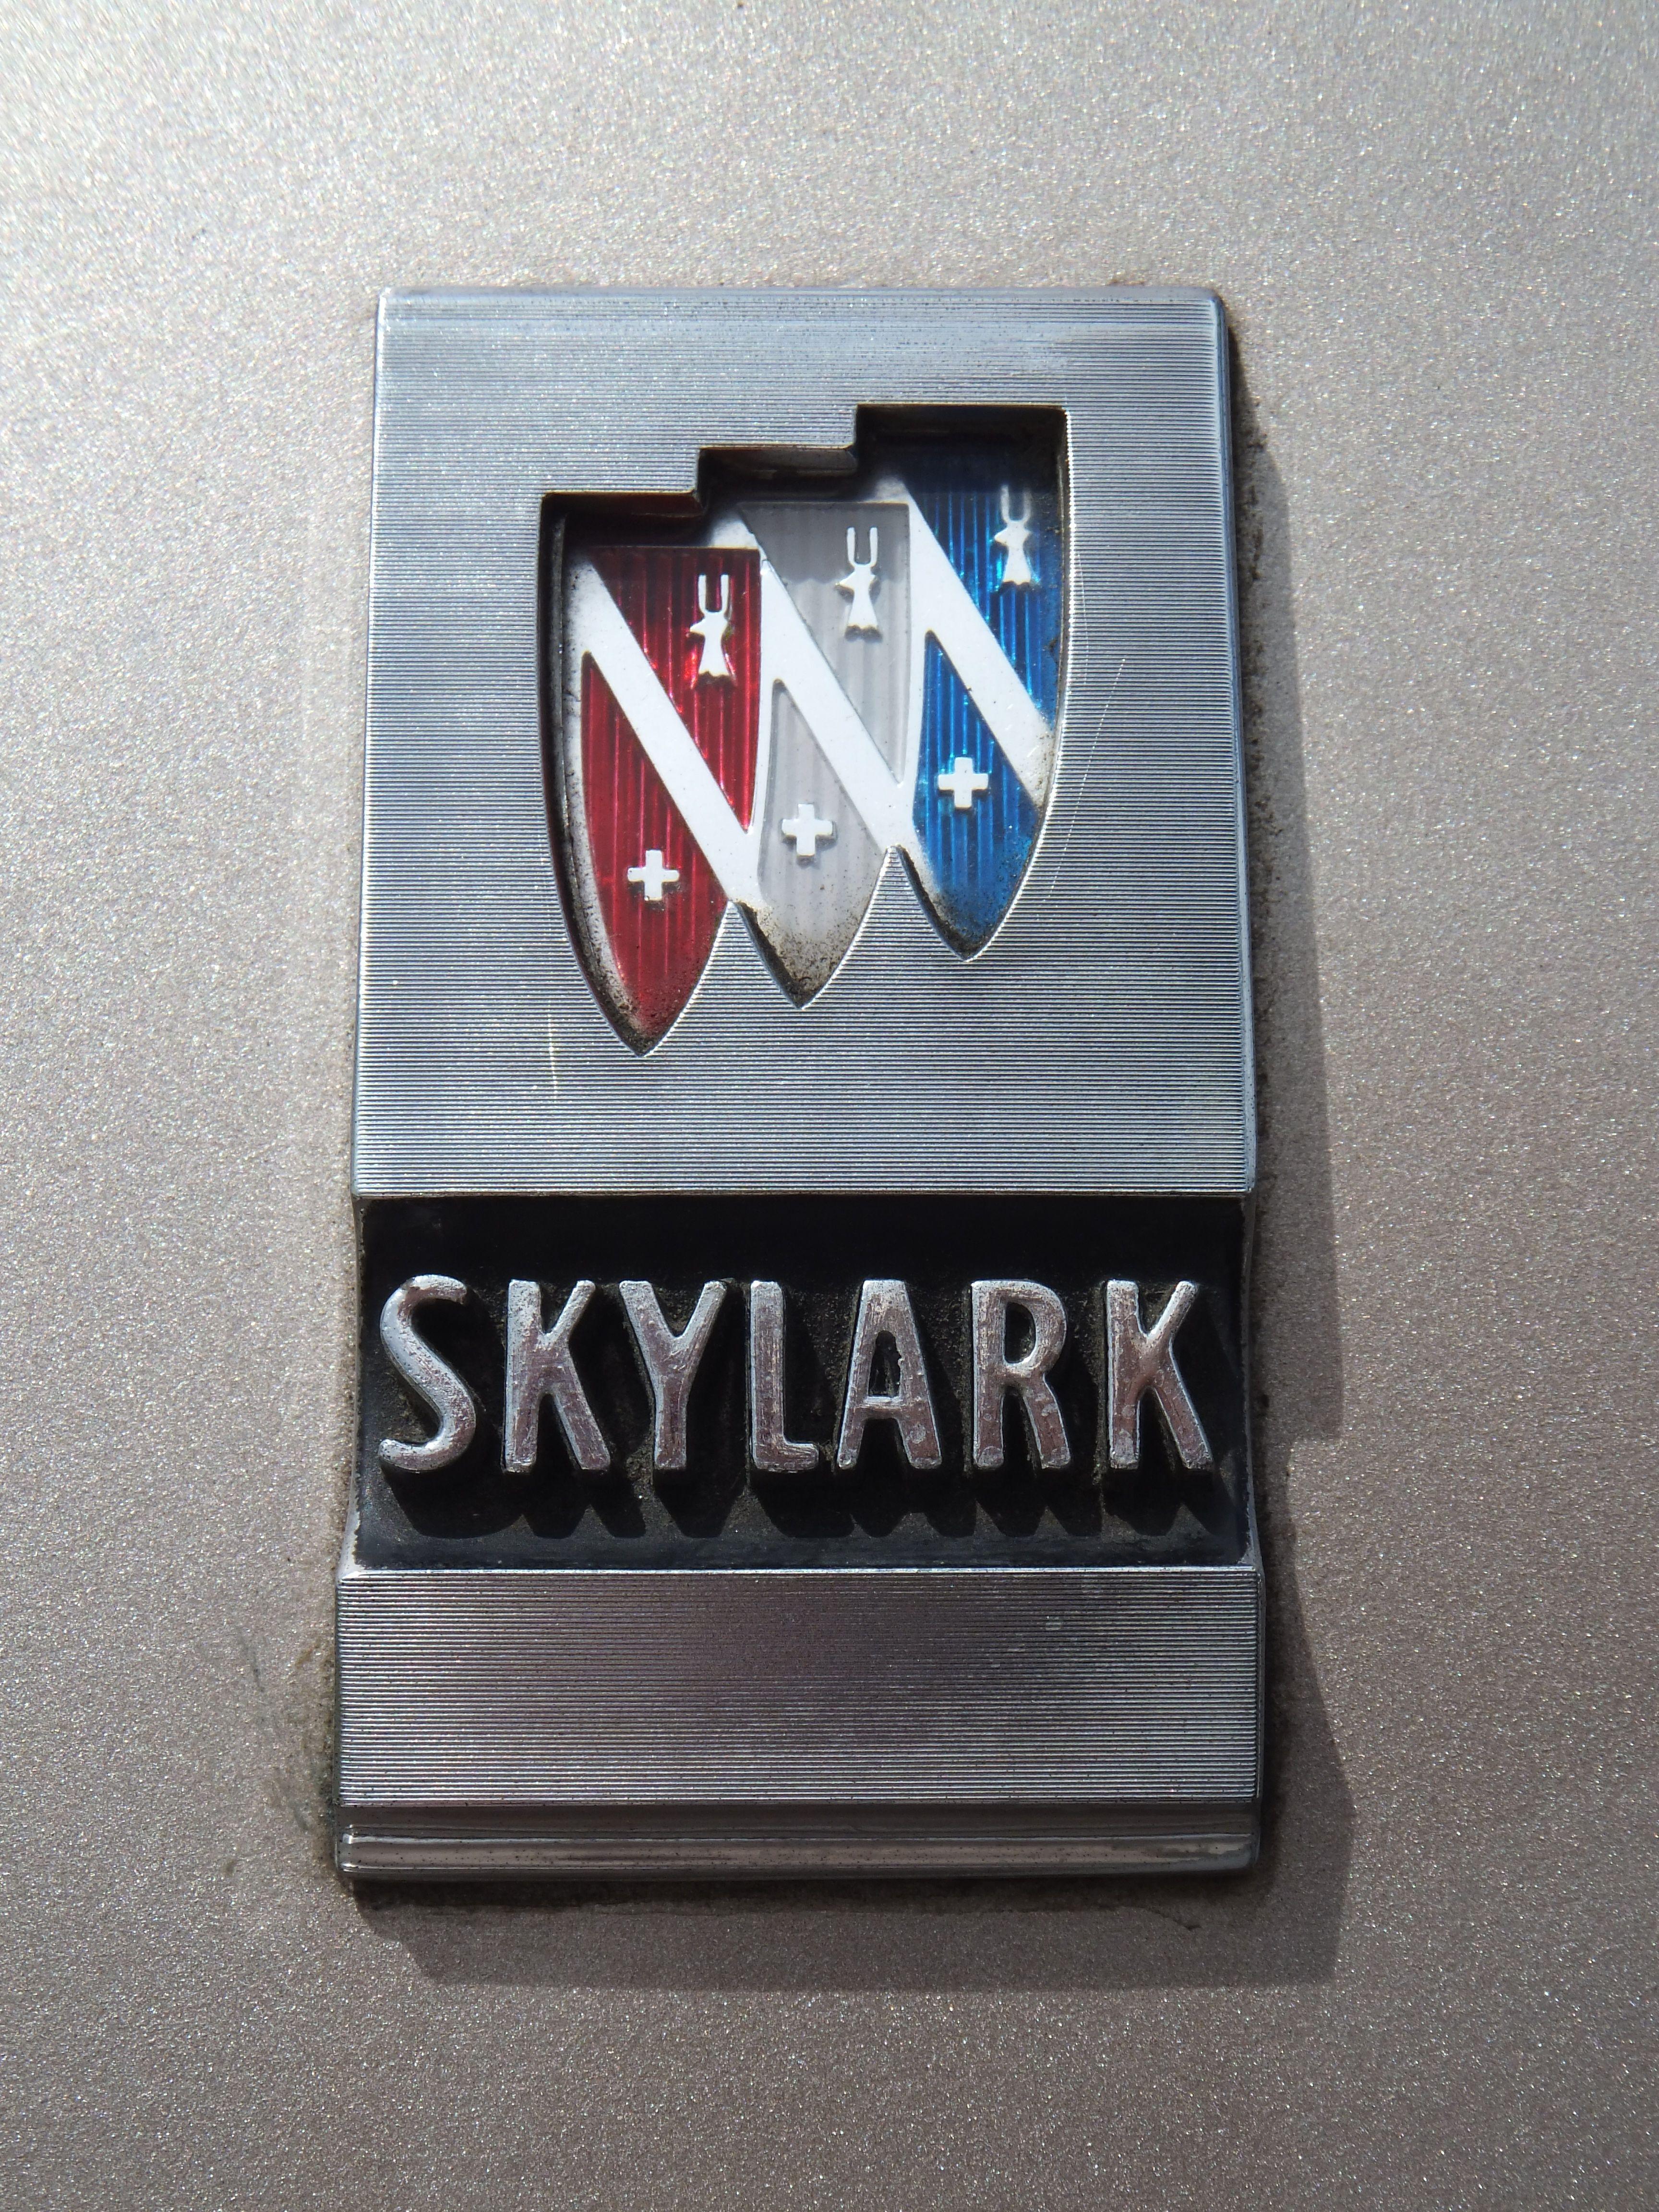 Buick Skylark Logo - File:Buick Skylark Logos.jpg - Wikimedia Commons